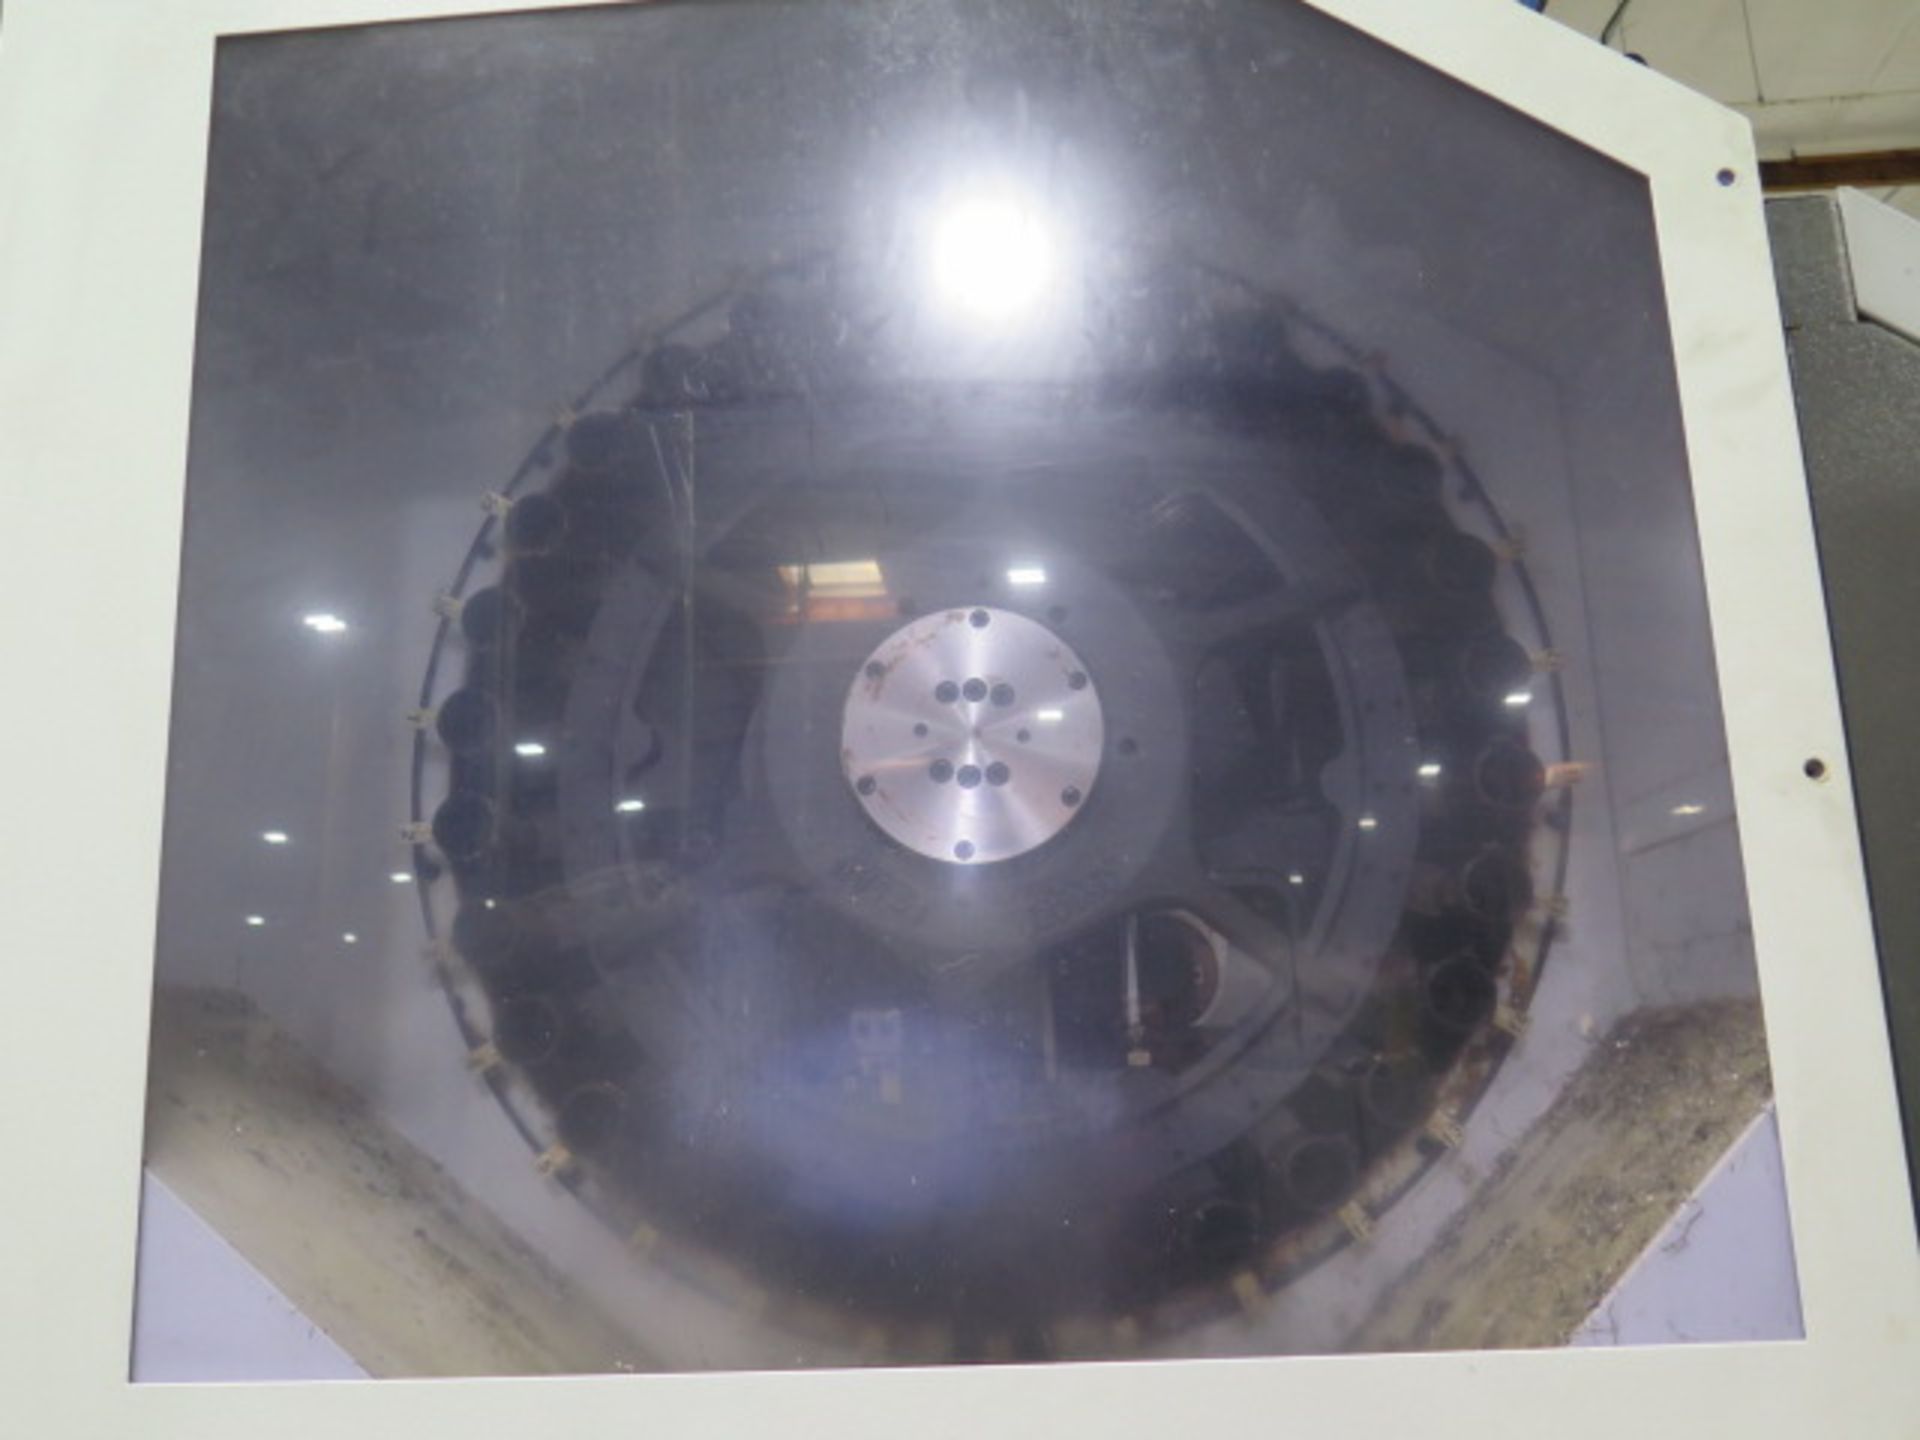 2007 Mori Seiki DuraVertical 5060 CNC Vertical Machining Center s/n DV005GF0788 w/ SOLD AS IS - Image 10 of 22